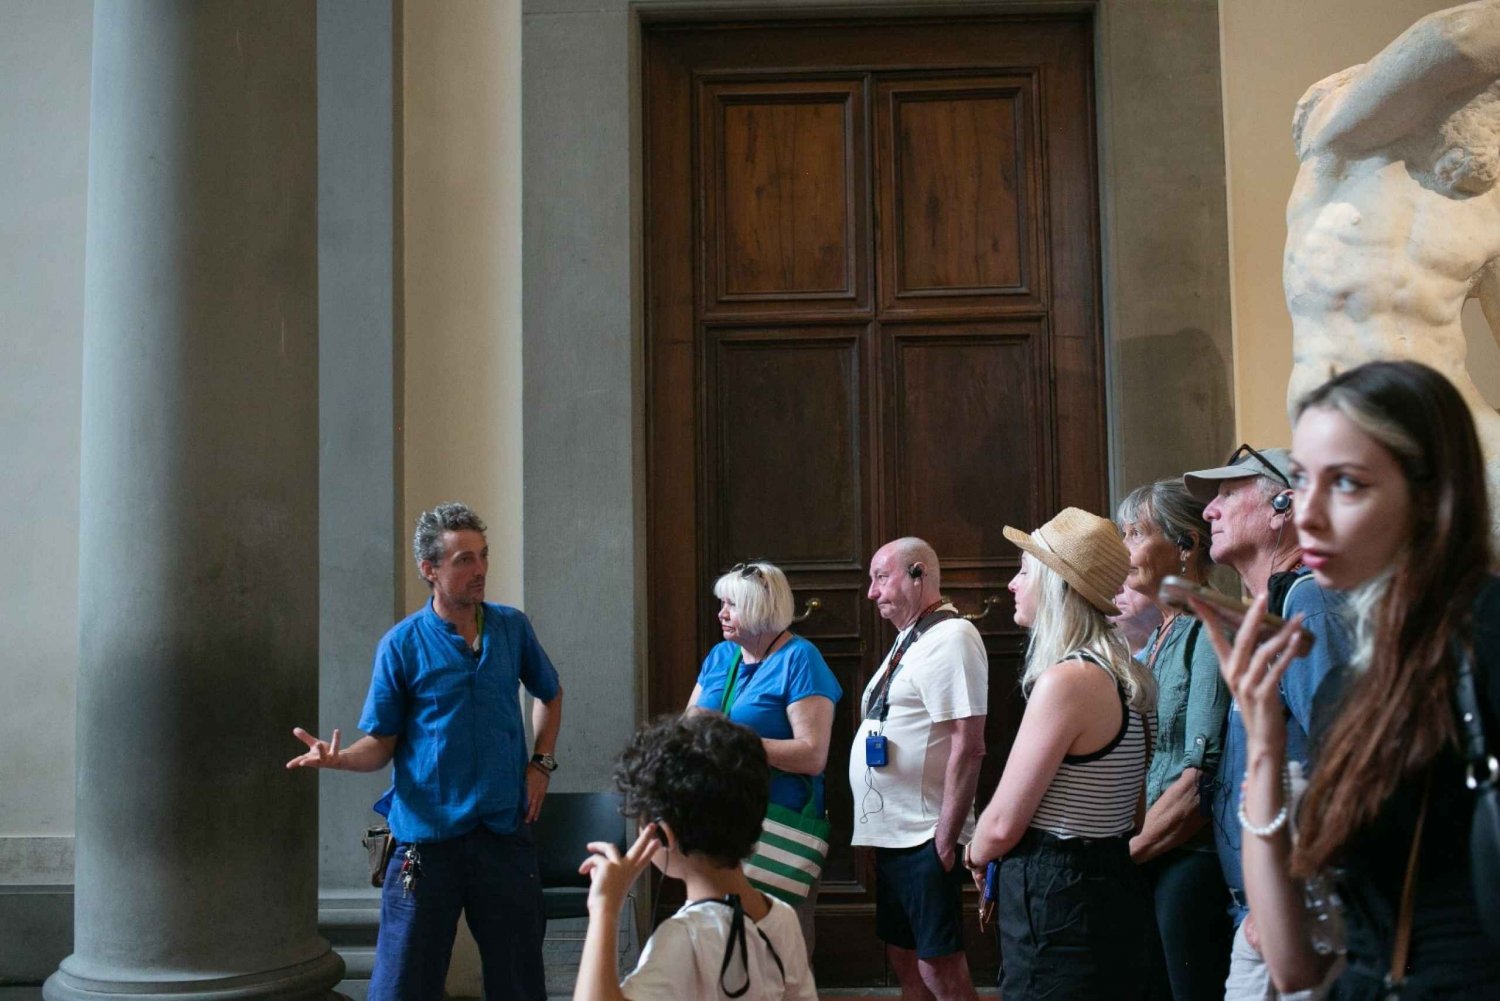 Firenze: Omvisning i Michelangelos David og Accademia-galleriet